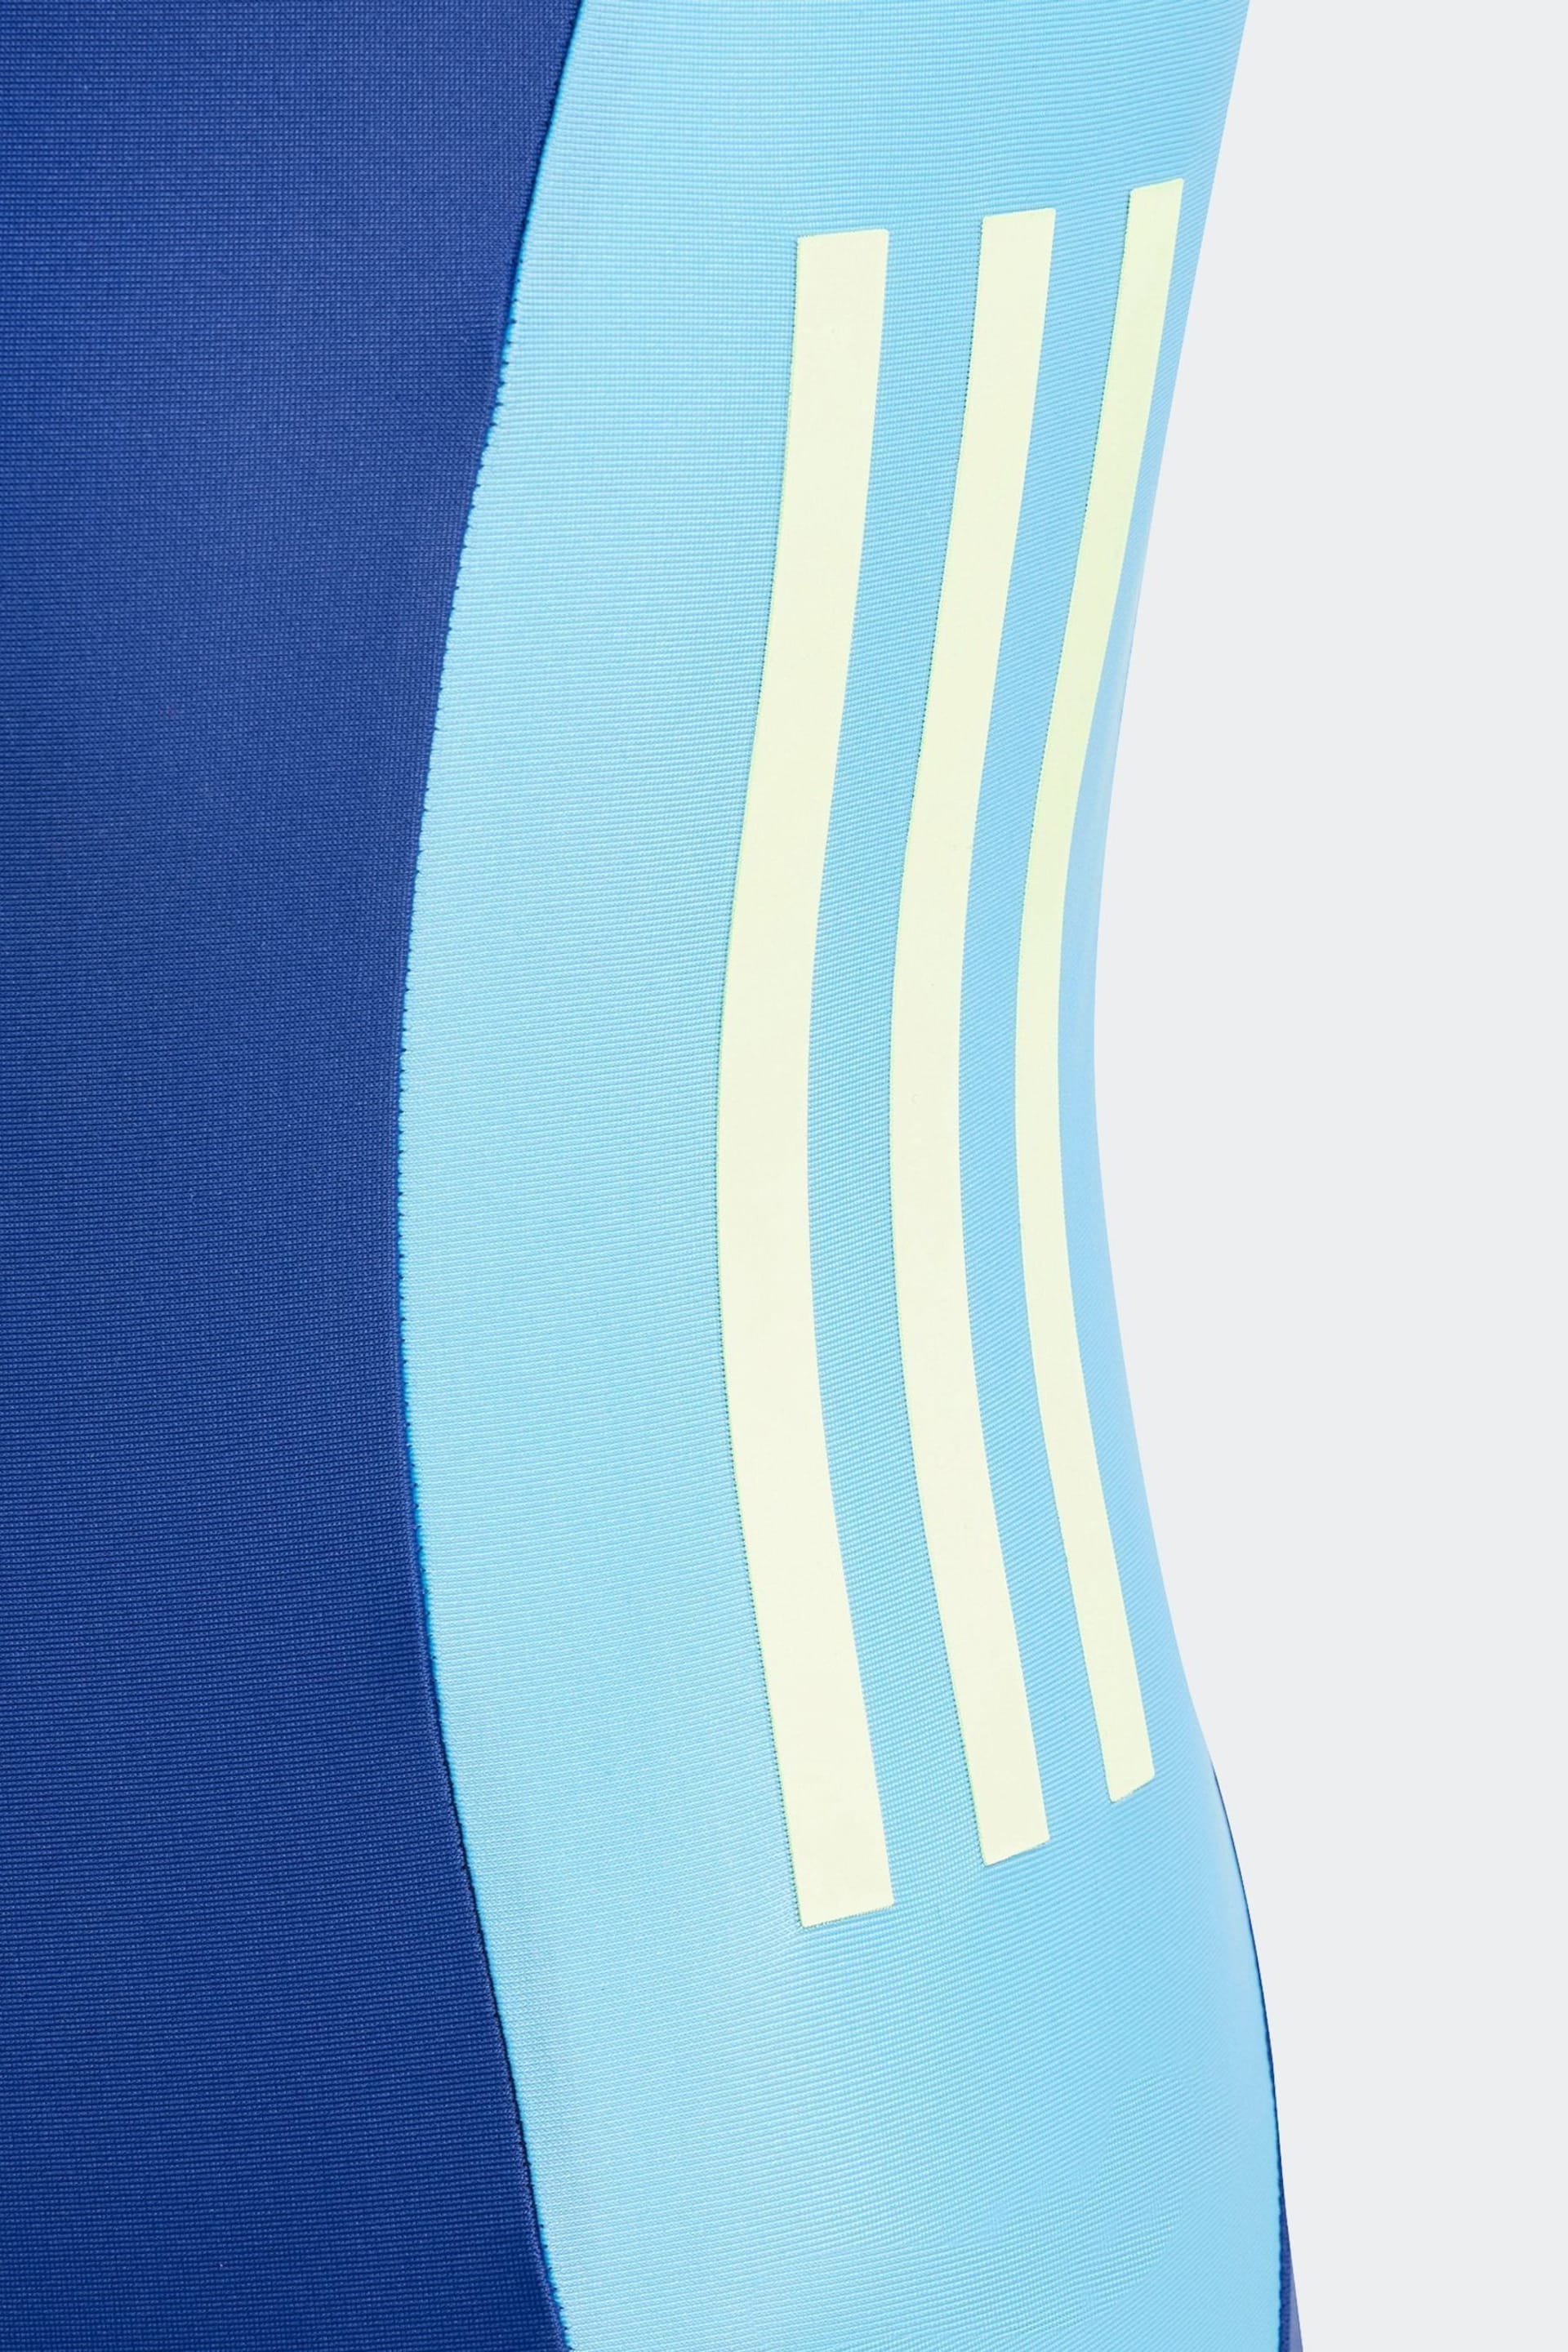 adidas Blue Cut 3 Stripes Swimsuit - Image 4 of 5